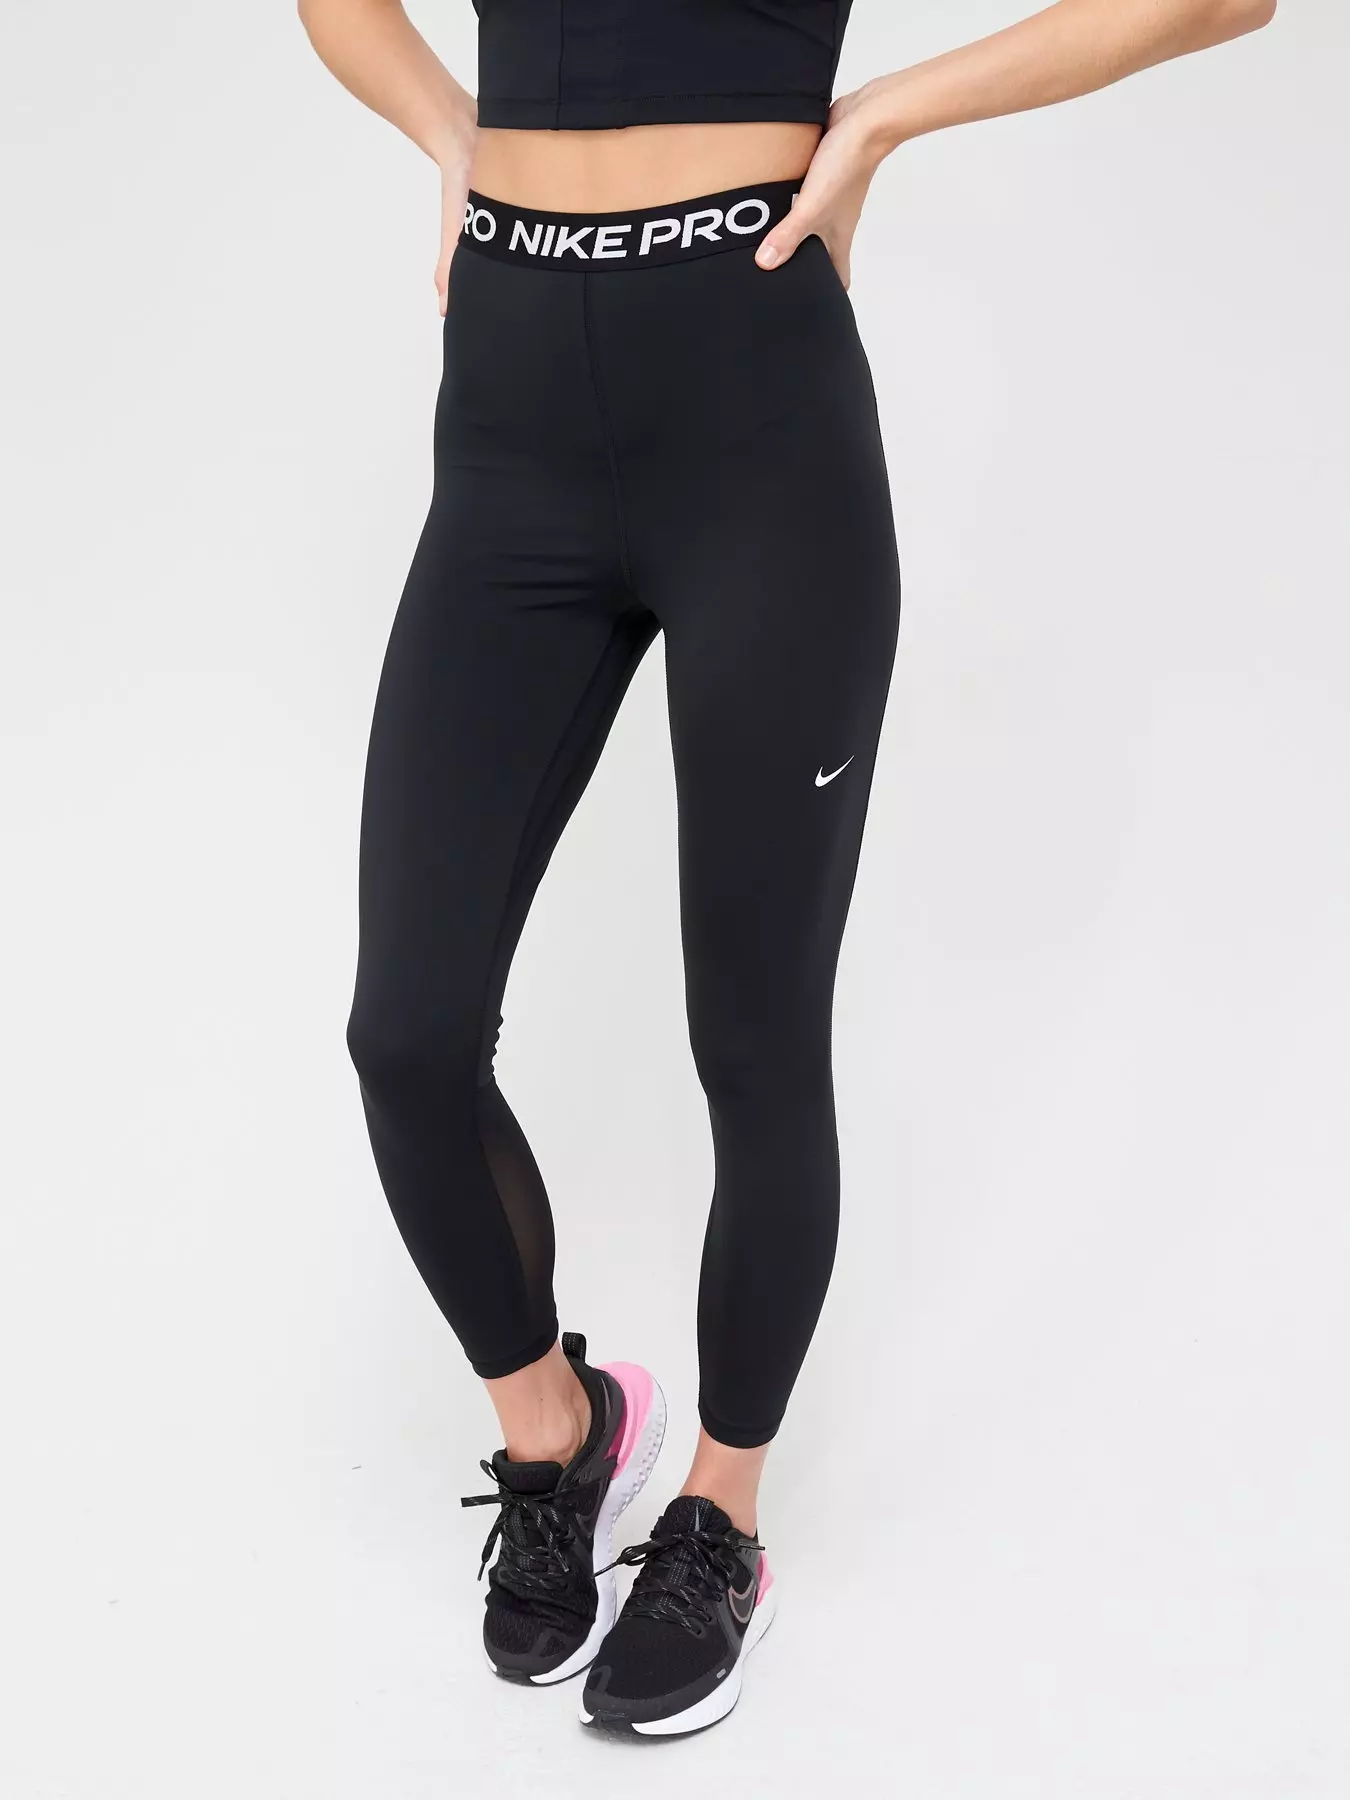 Womens Black Nike Tights & Leggings